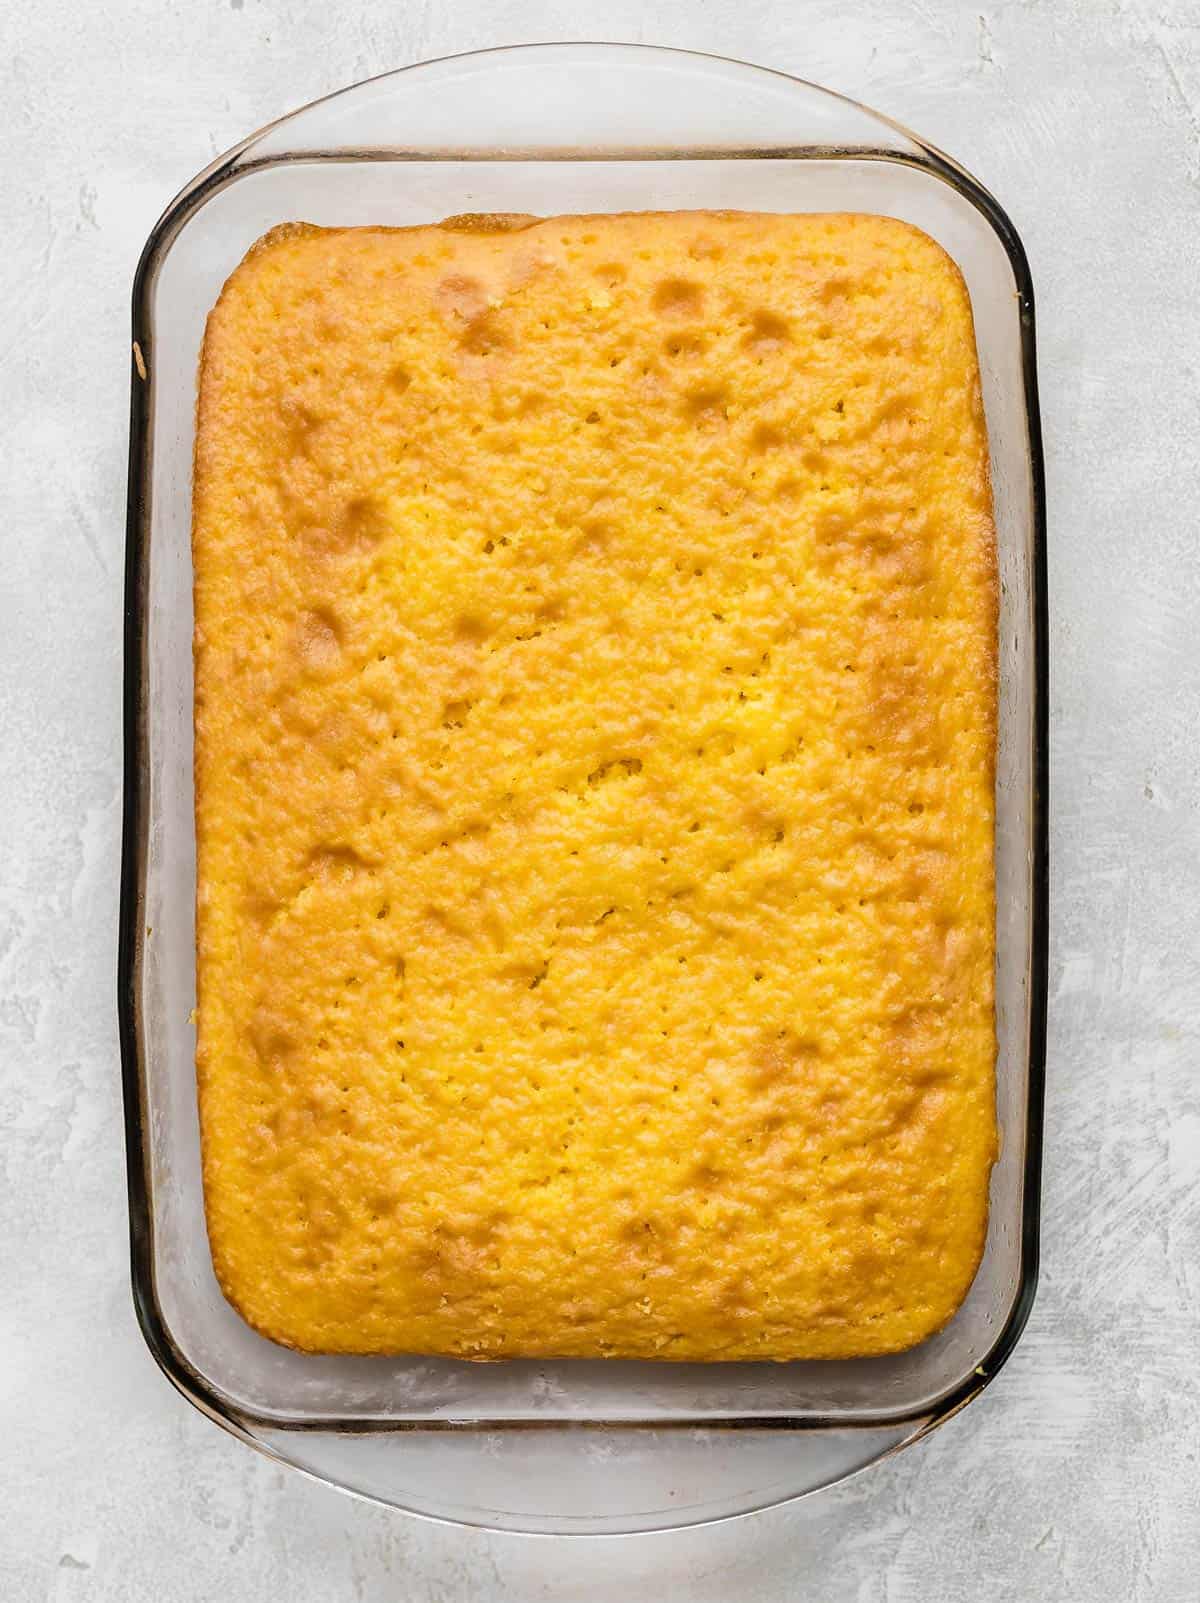 A baked lemon cake in a rectangular glass pan.